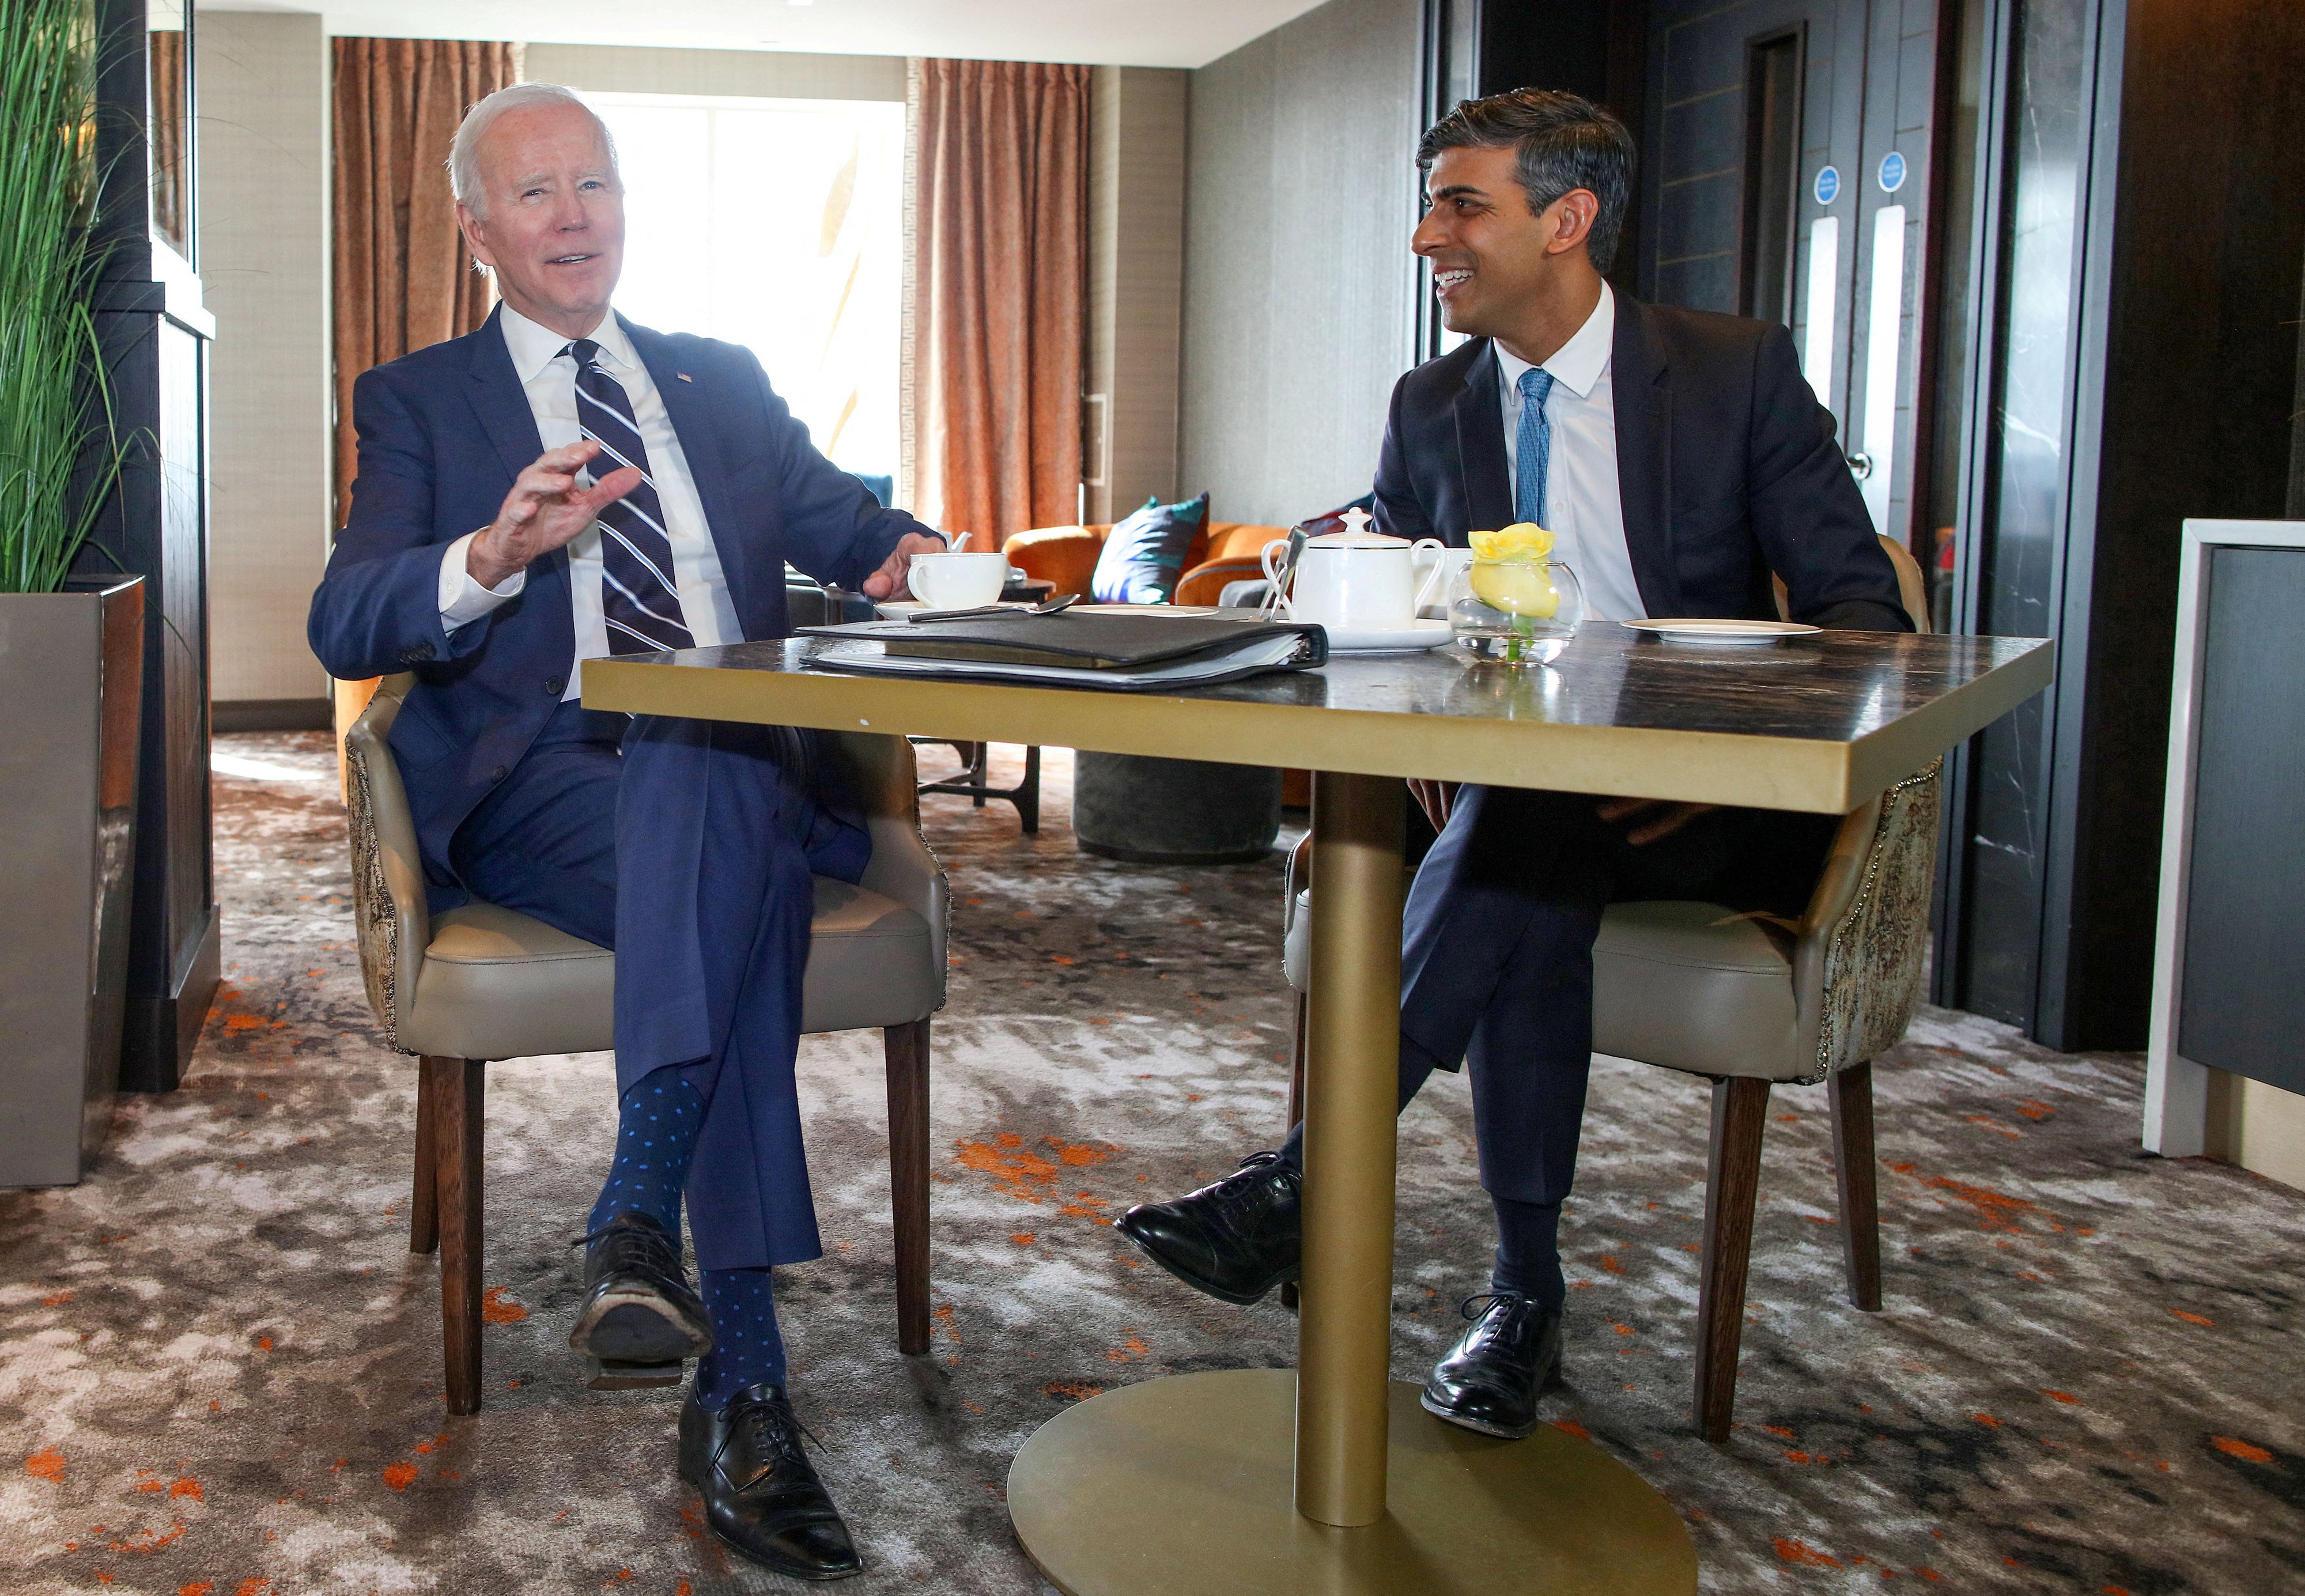 US President Joe Biden, left, and Britain’s Prime Minister Rishi Sunak in Belfast on April 12. Photo: Pool via Reuters